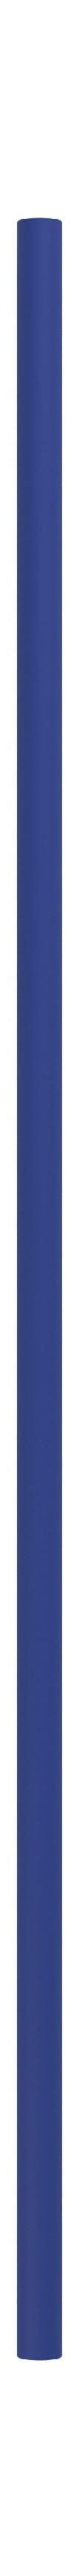 Moebe Regalsystem/Wandregalbein 85 cm, tiefblau